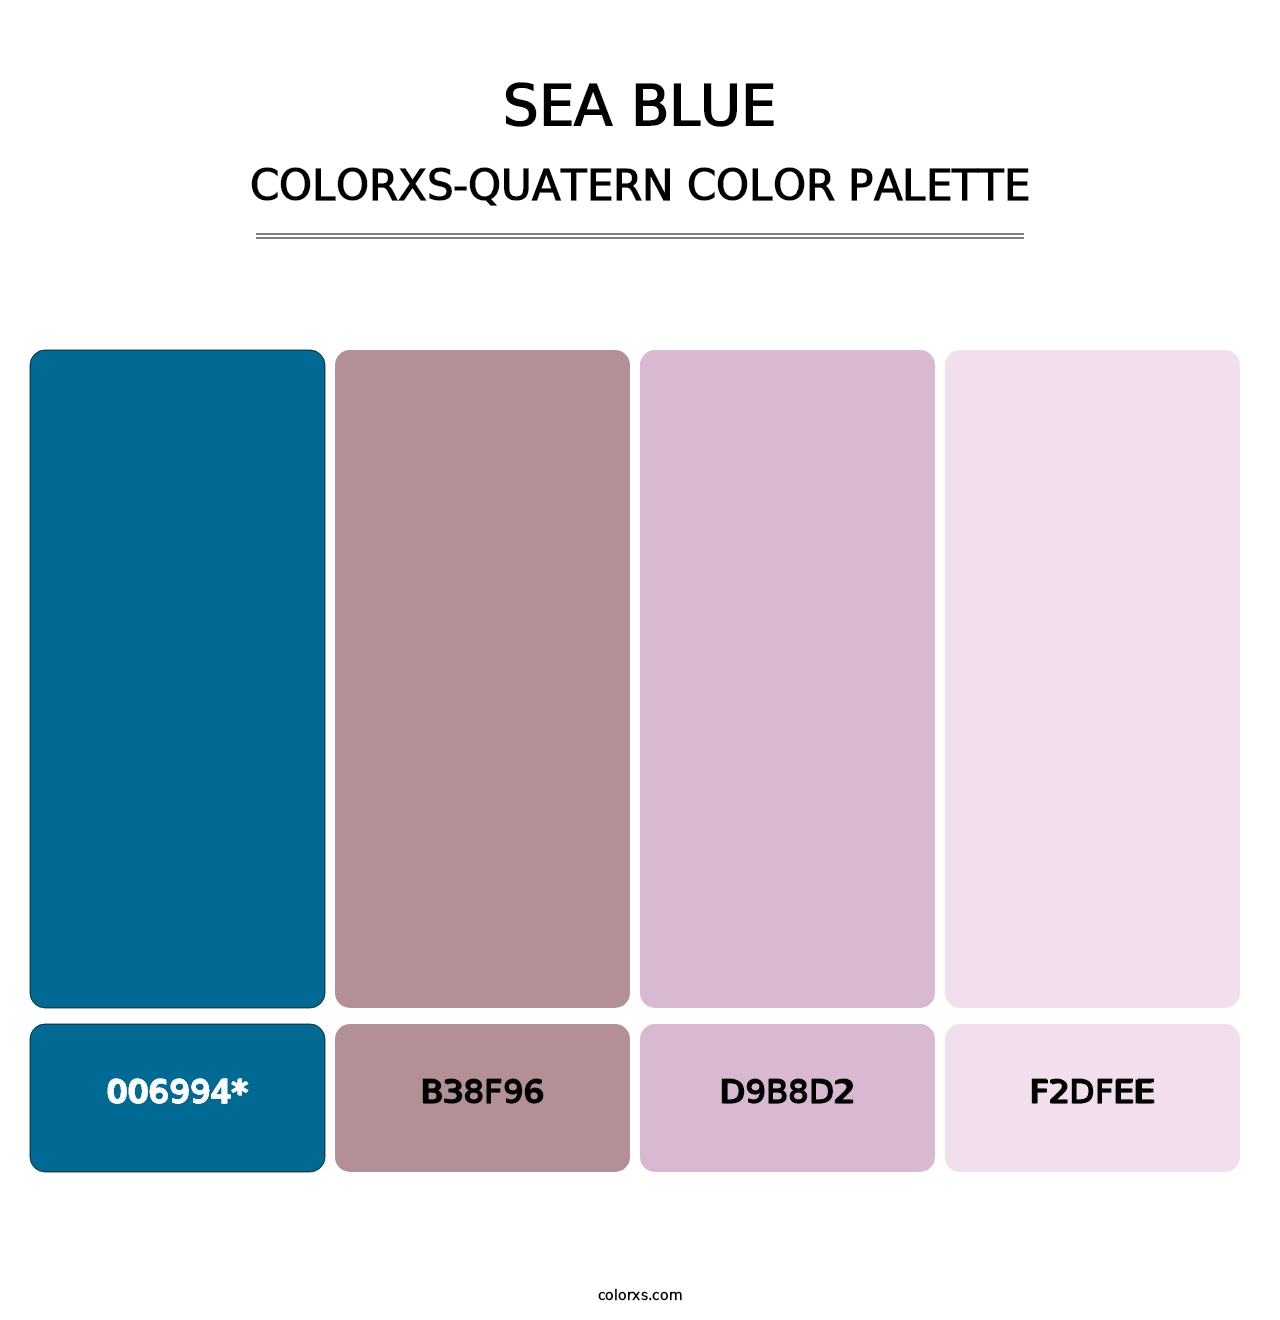 Sea Blue - Colorxs Quatern Palette